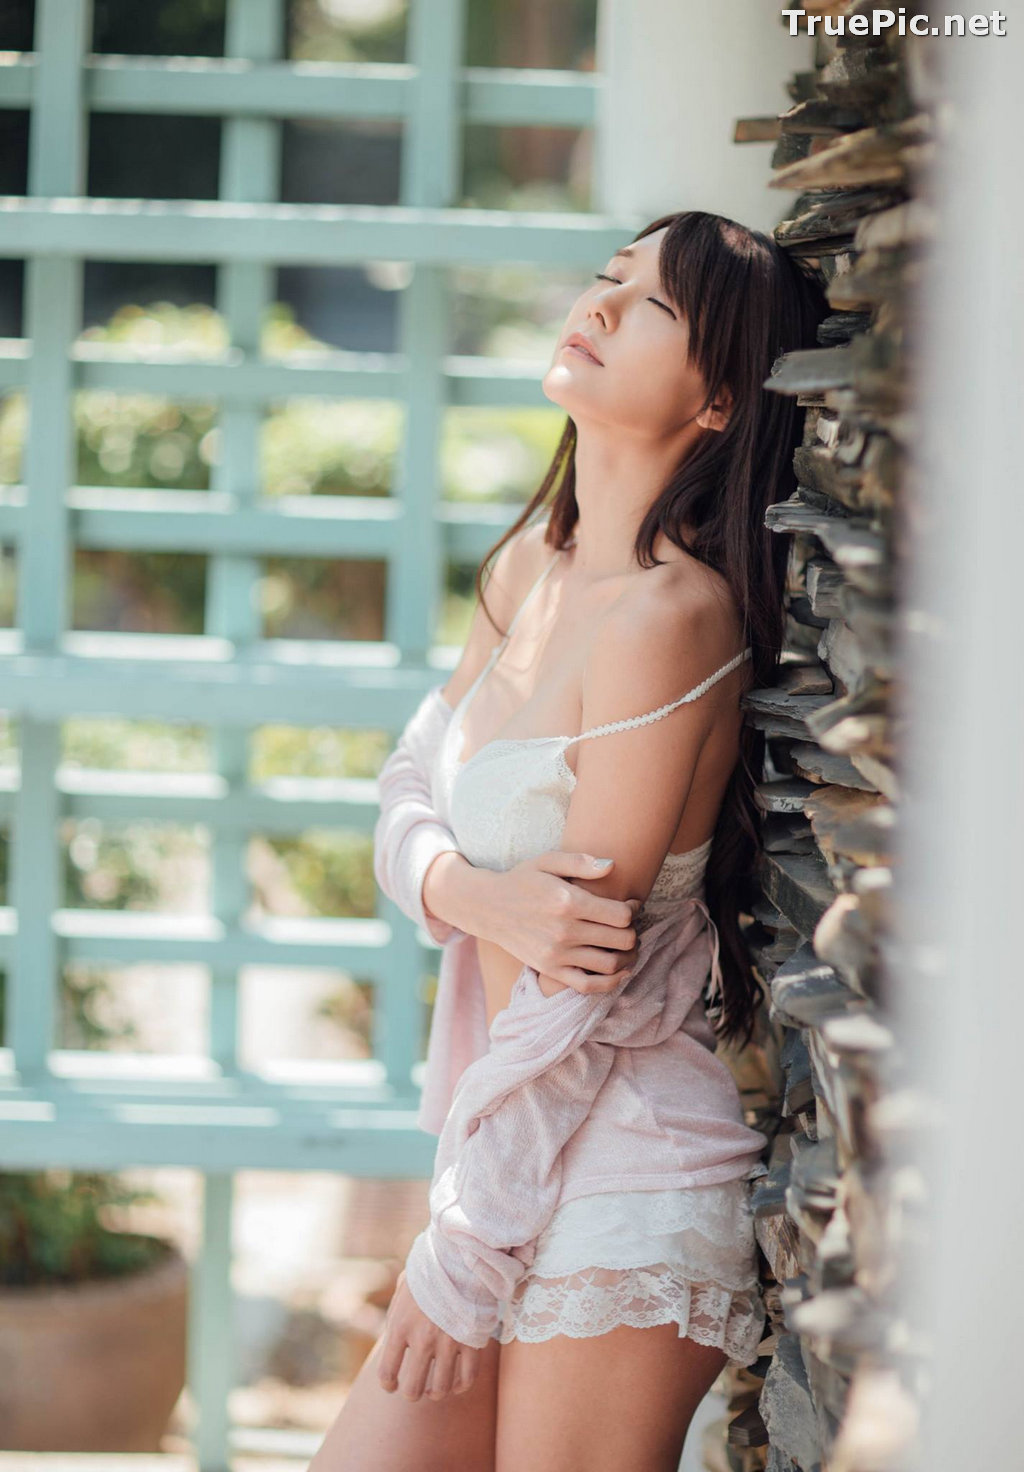 Image Thailand Model - Mamu Maeda - Hot Summer Day - TruePic.net - Picture-7